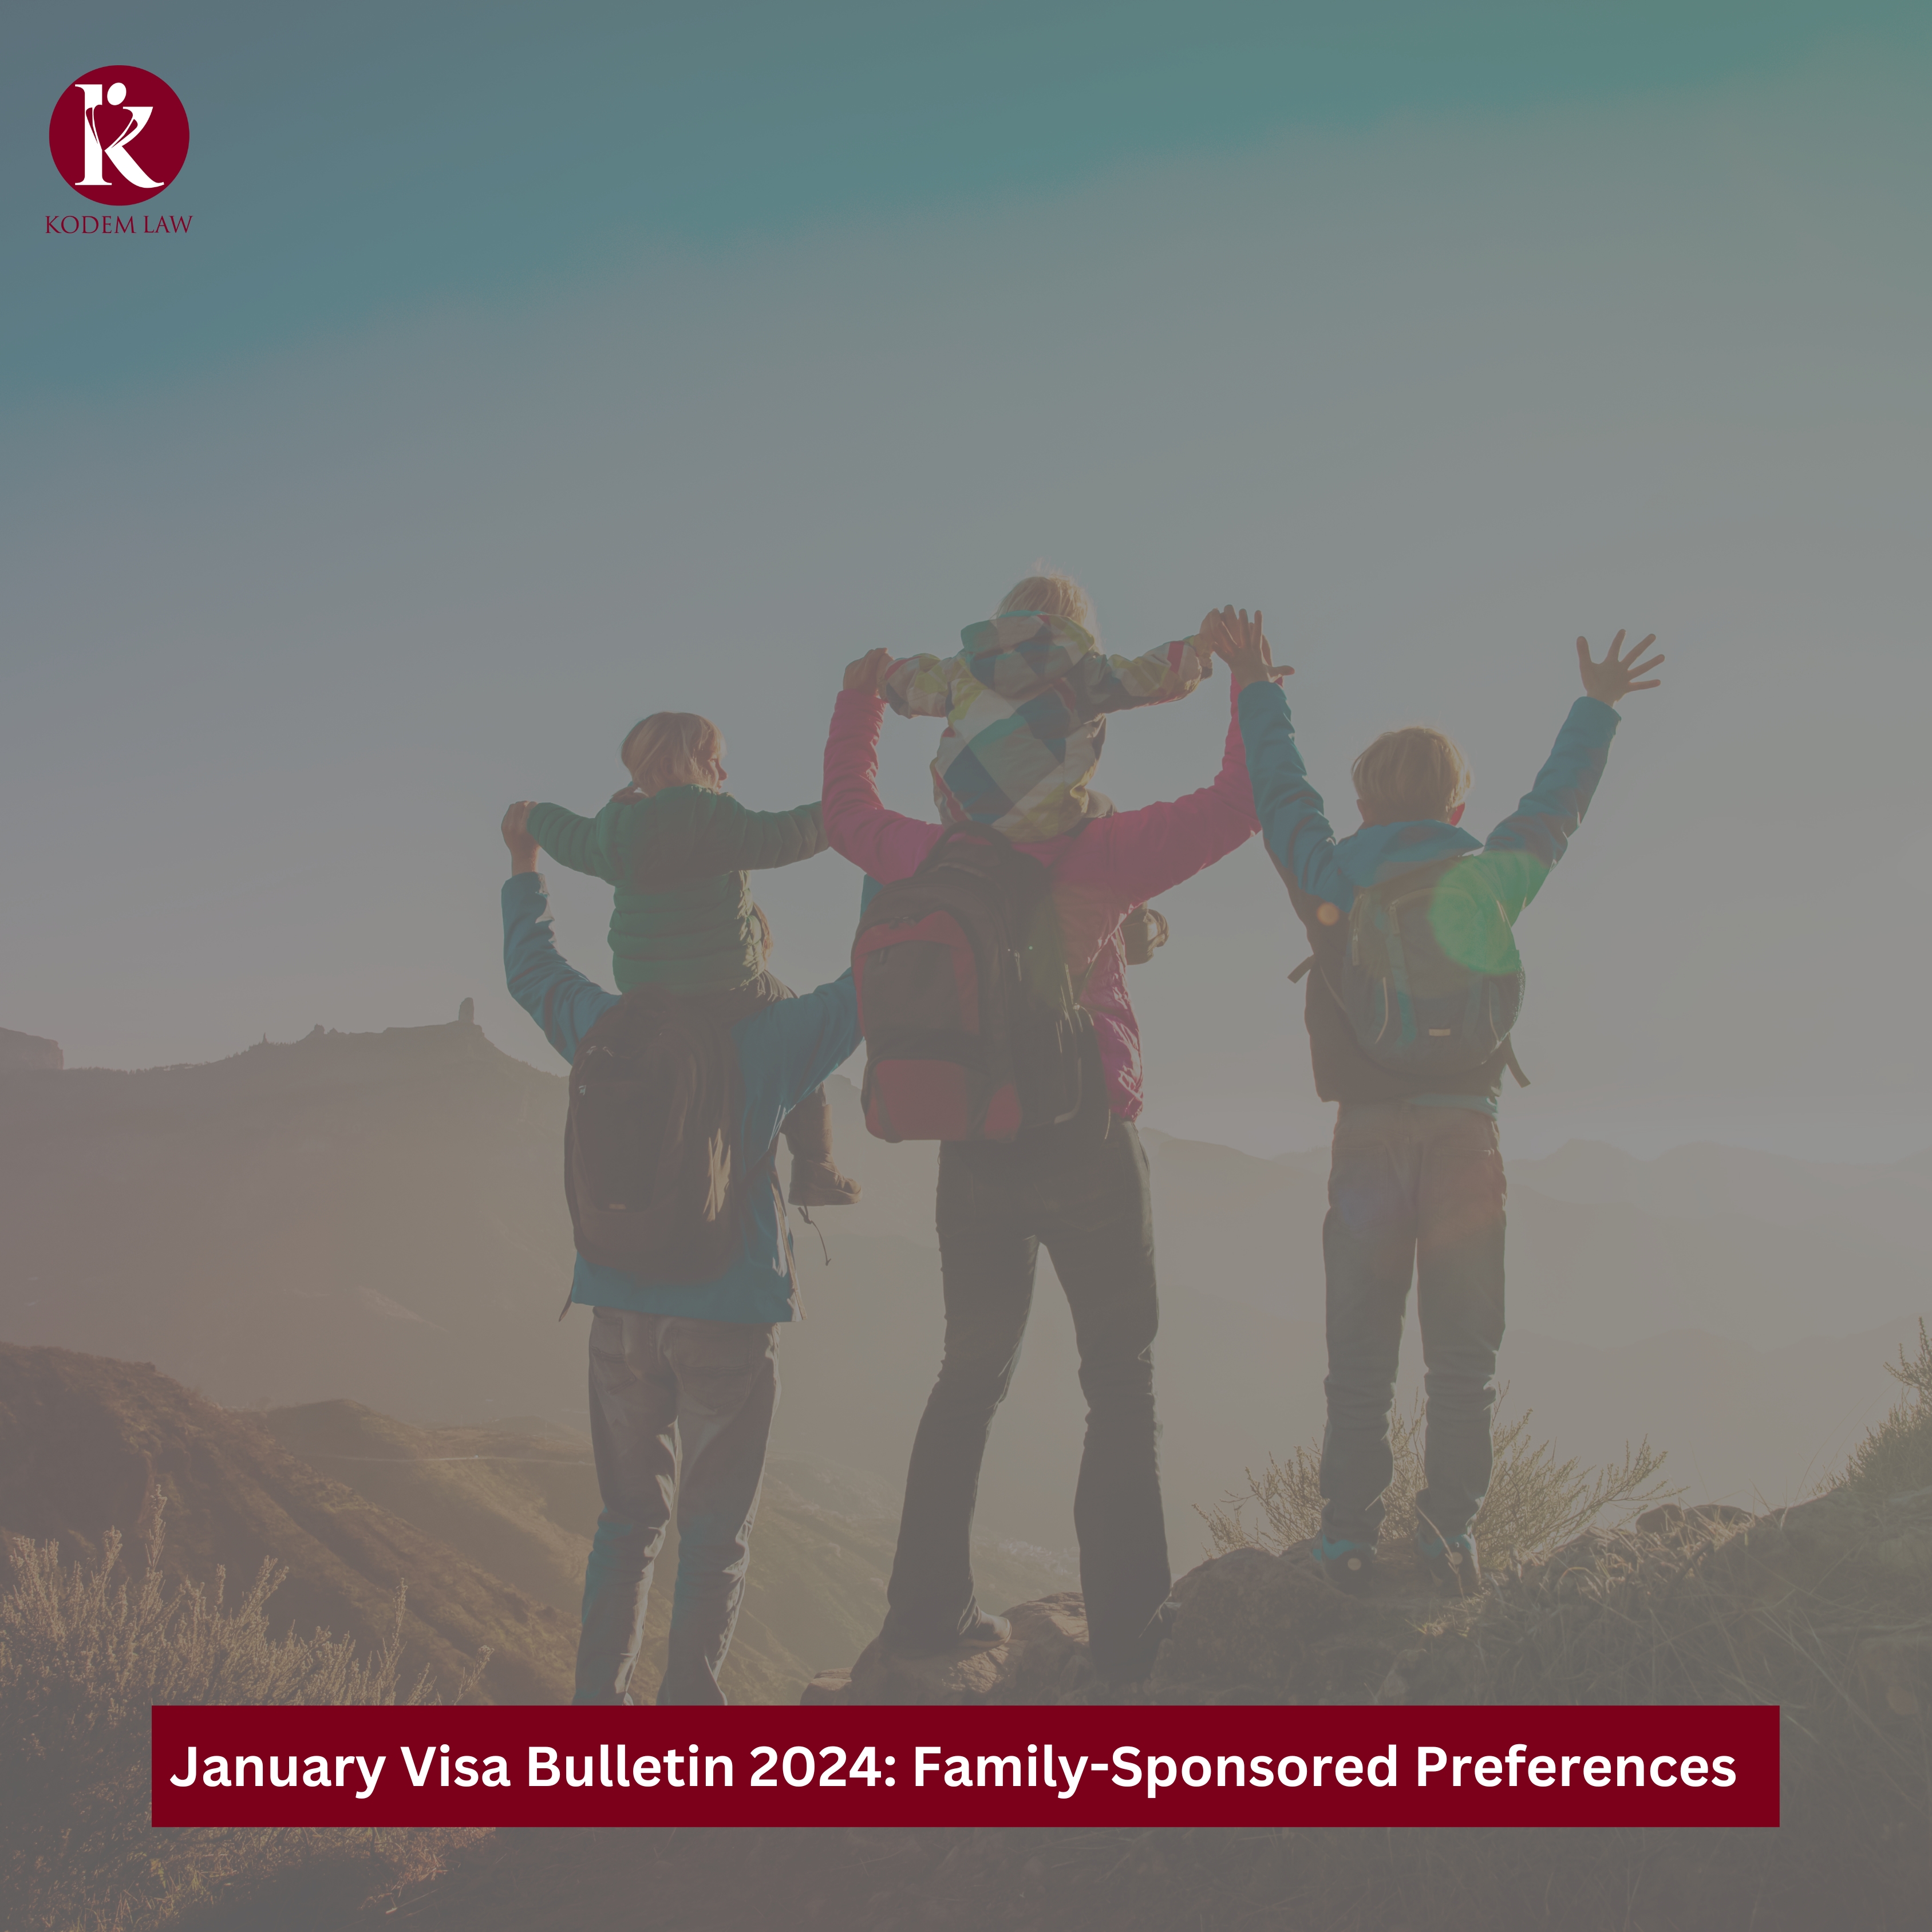 January Visa Bulletin 2024 Family-Sponsored Preferences